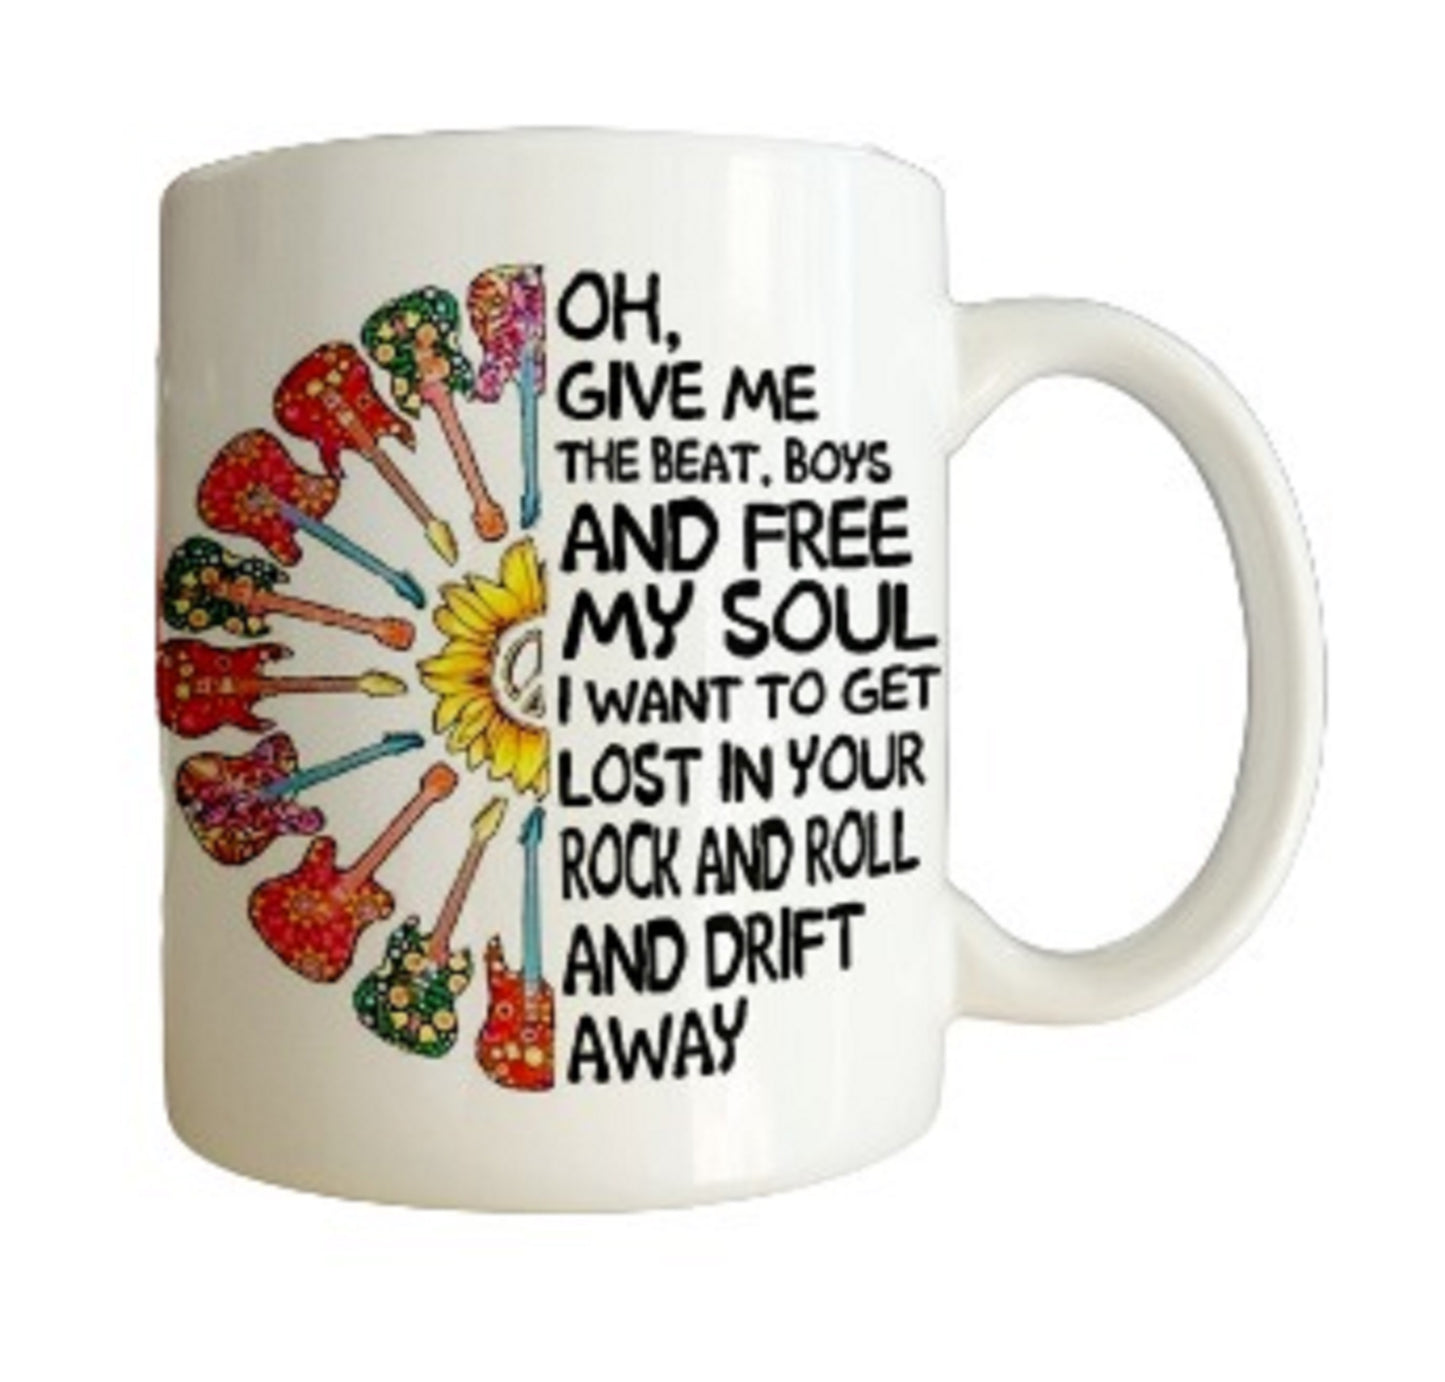  Drift Away Guitar Music Coffee Mug by Free Spirit Accessories sold by Free Spirit Accessories